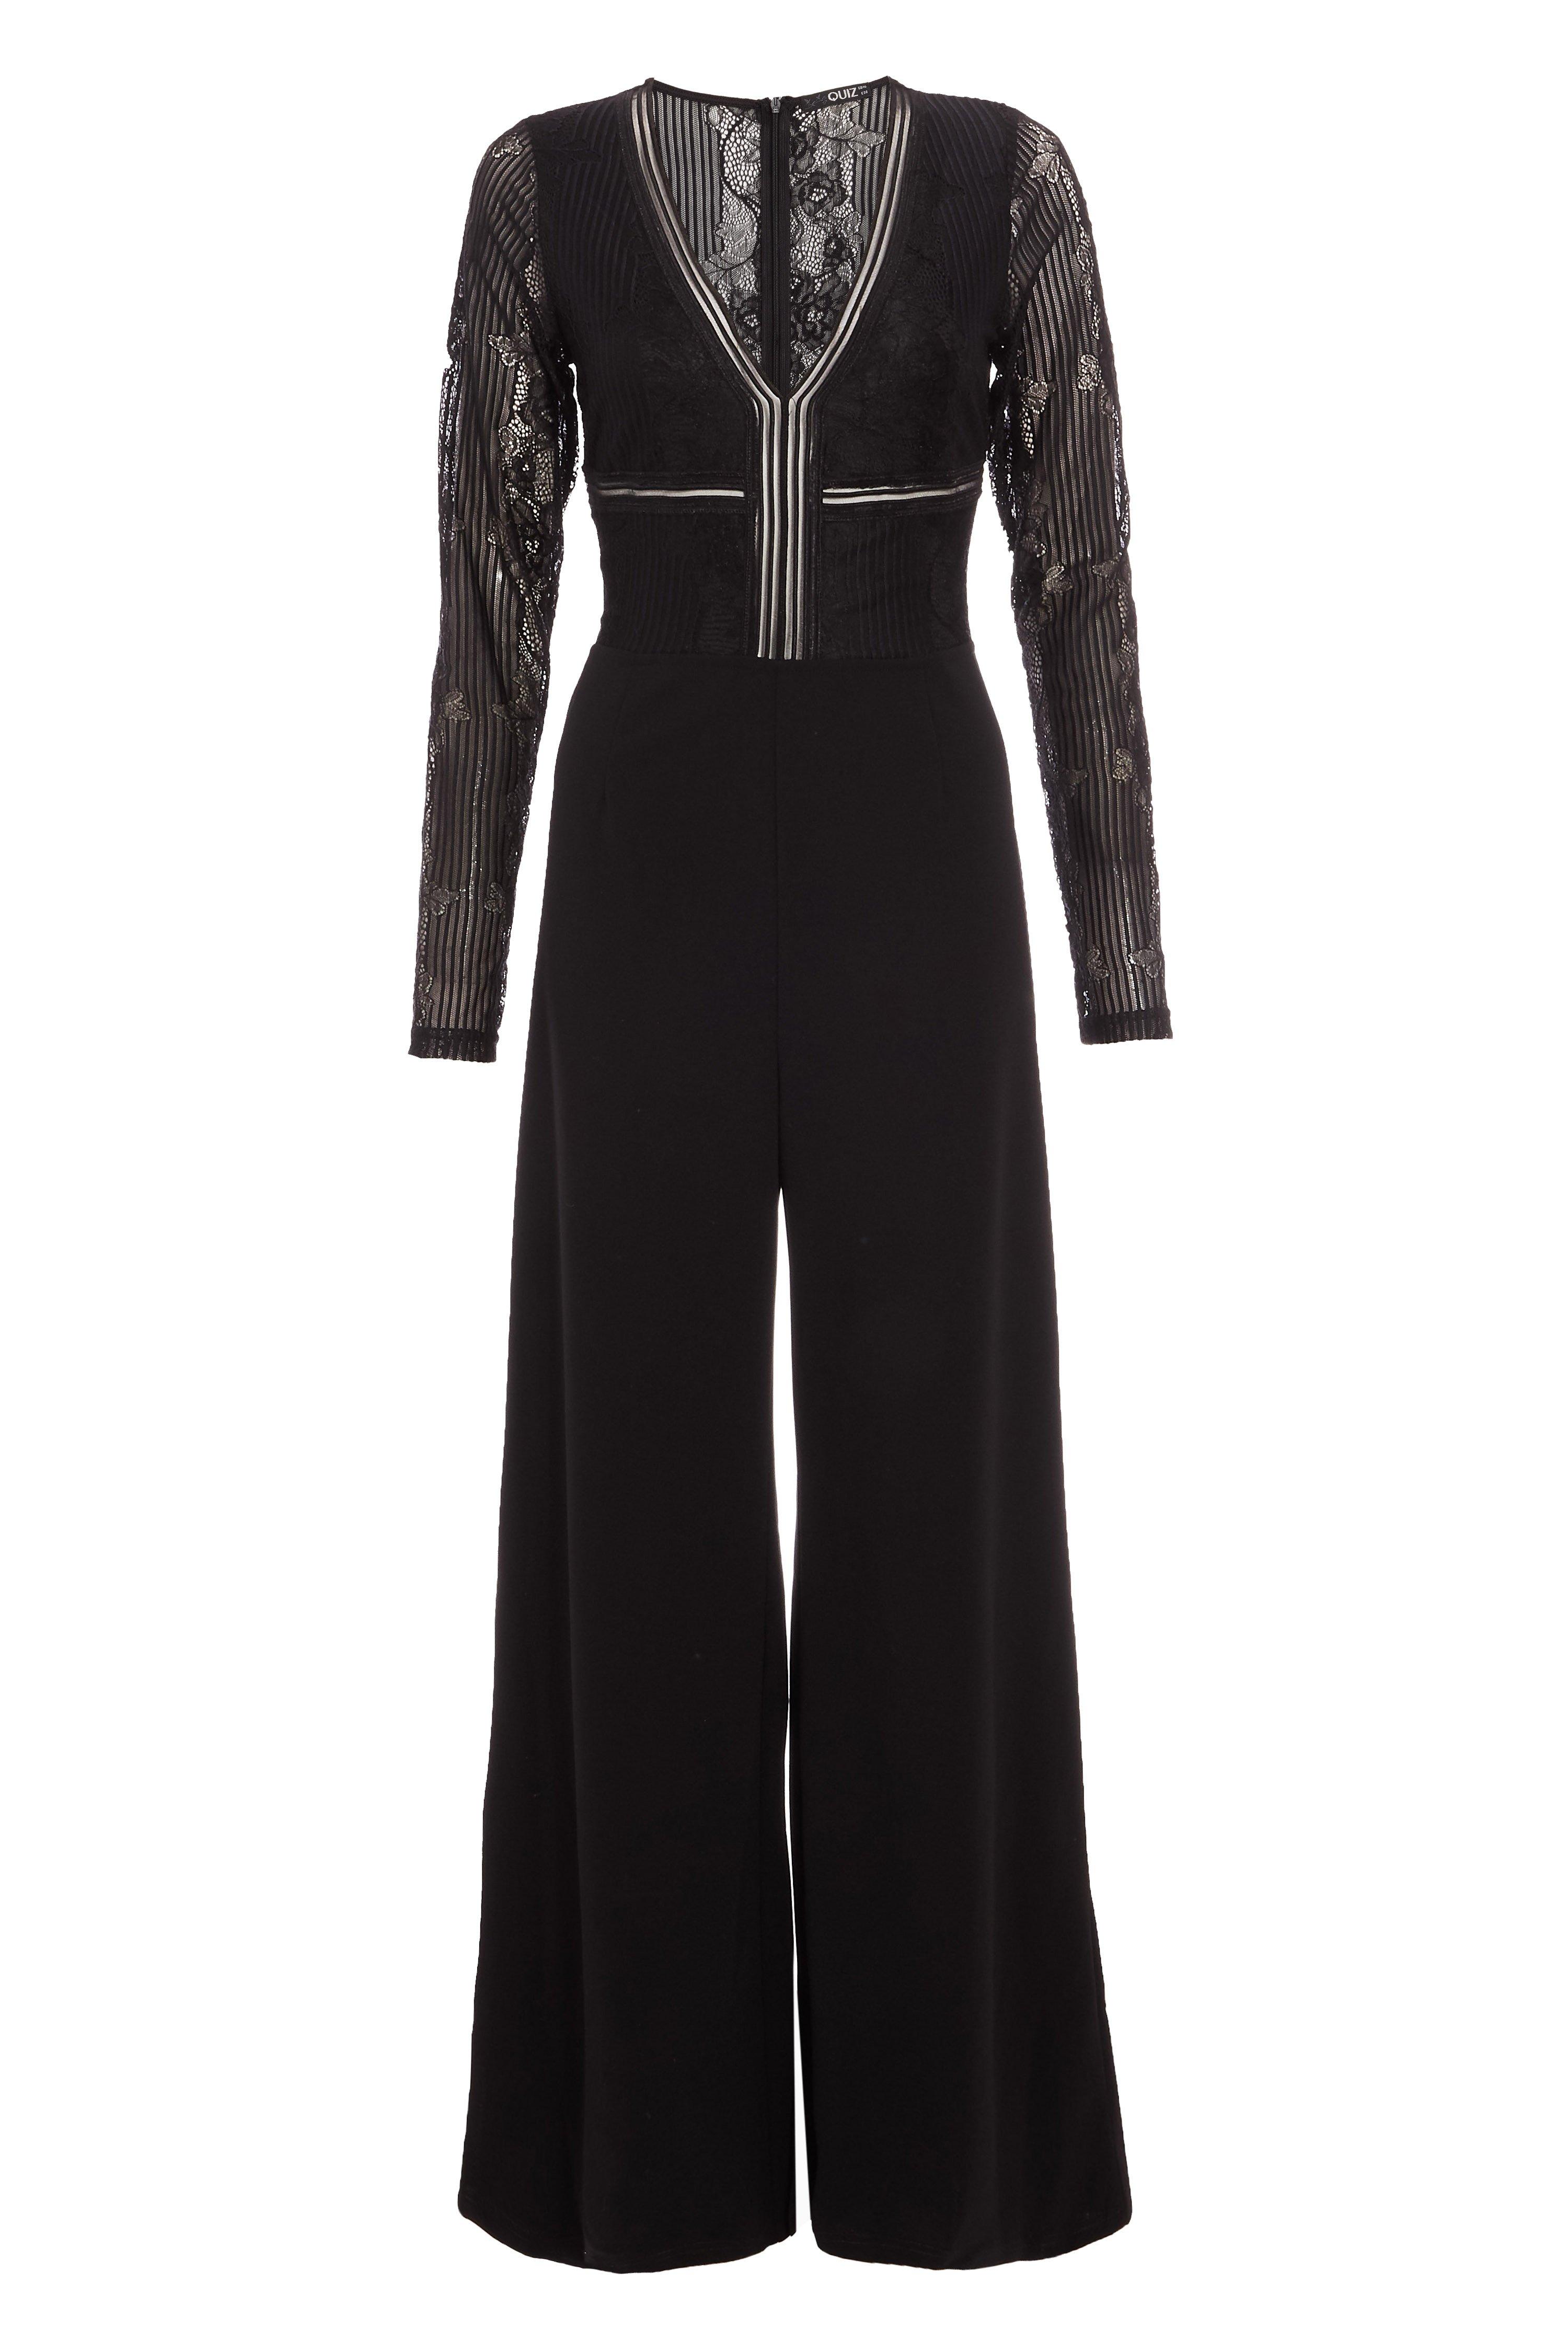 Black Lace V Neck Palazzo Jumpsuit - Quiz Clothing